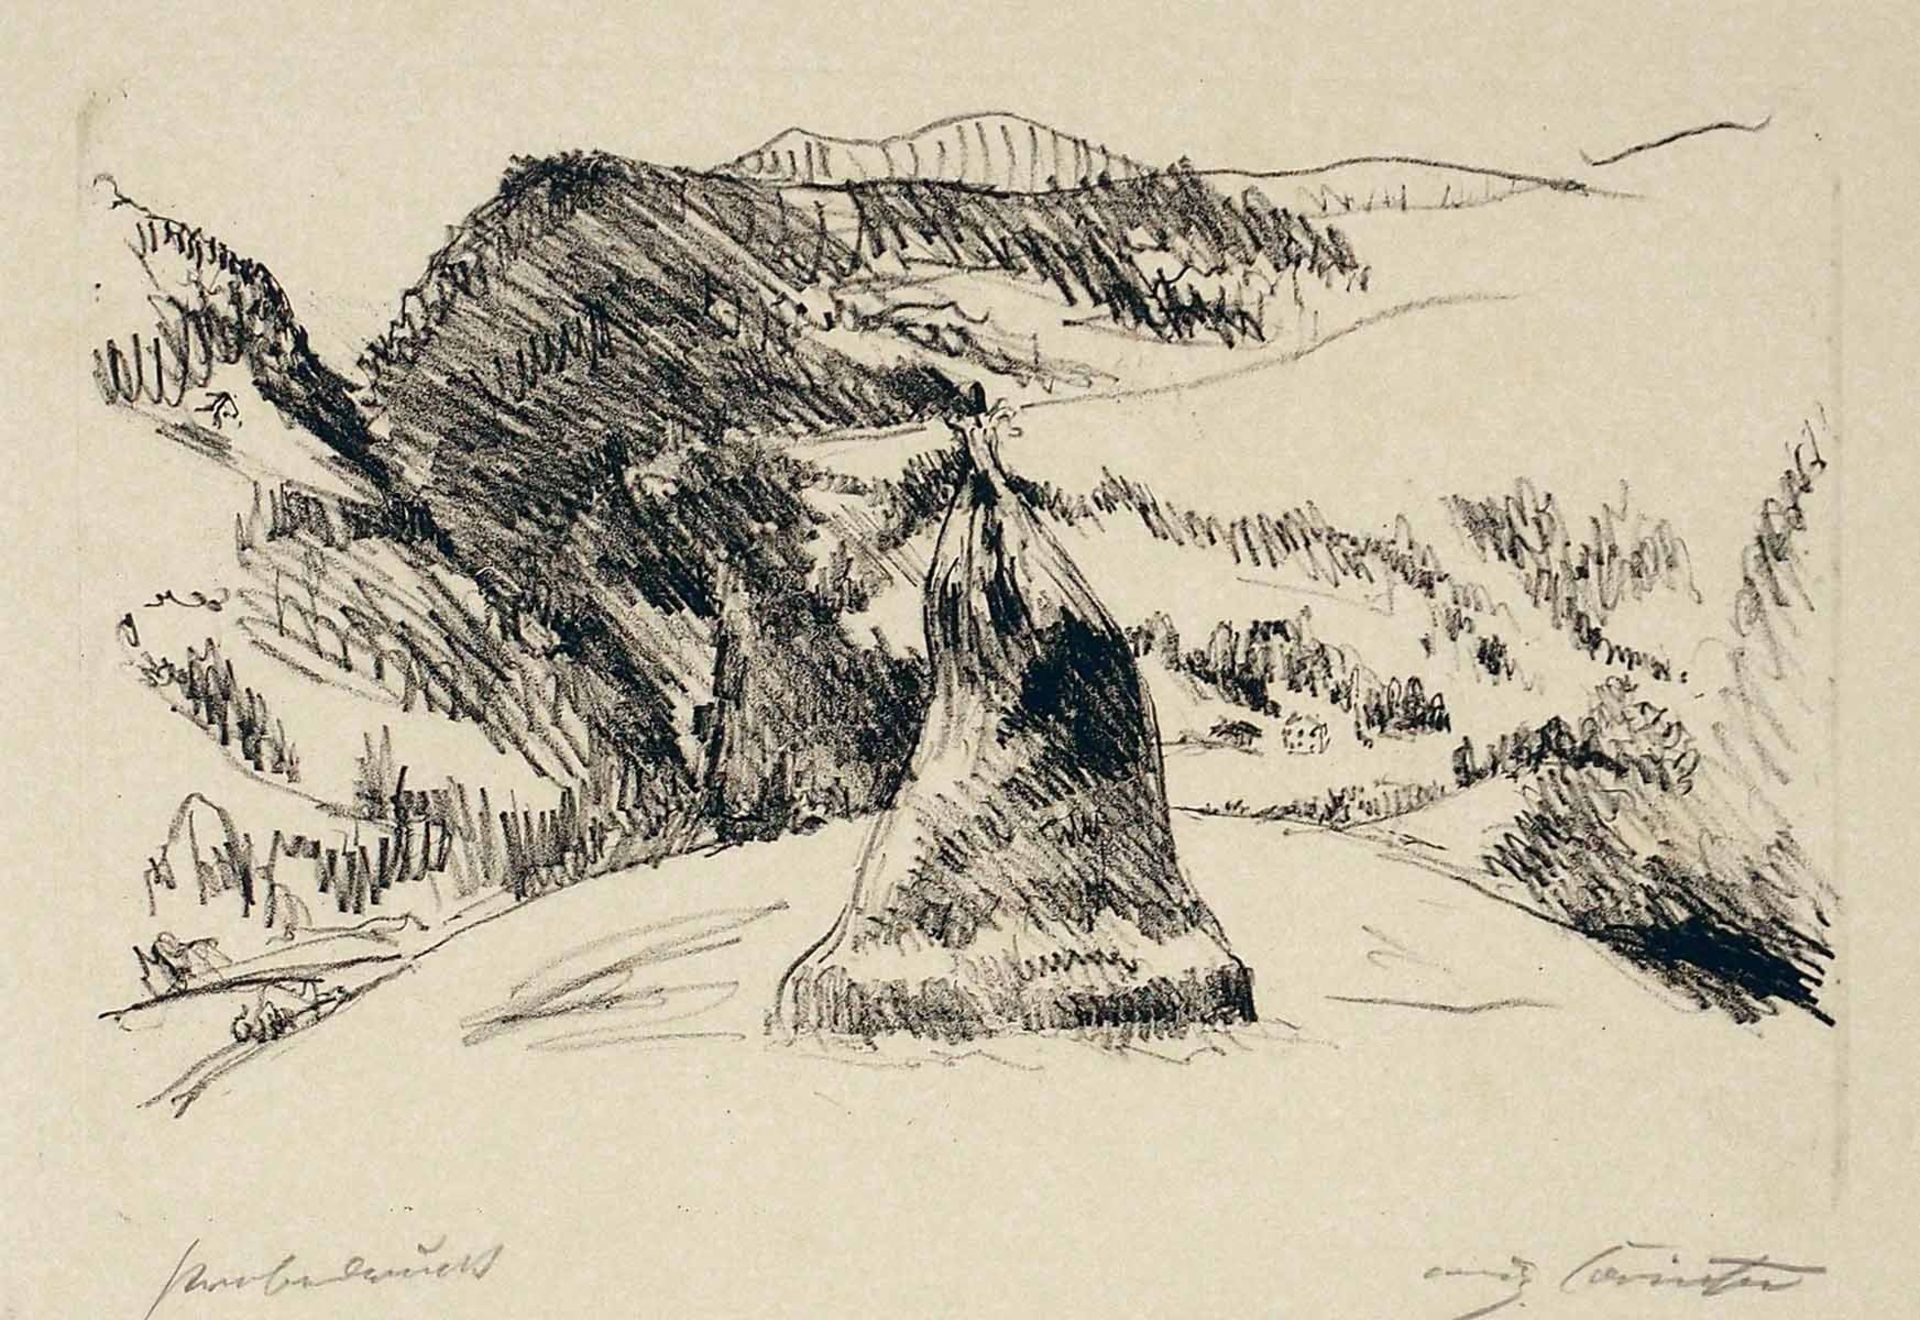 Lovis Corinth Tapiau 1858 - 1925 Zandvoort Tiroler Landschaft. Lithographie. 1911. 24,5 x 36,7 cm (